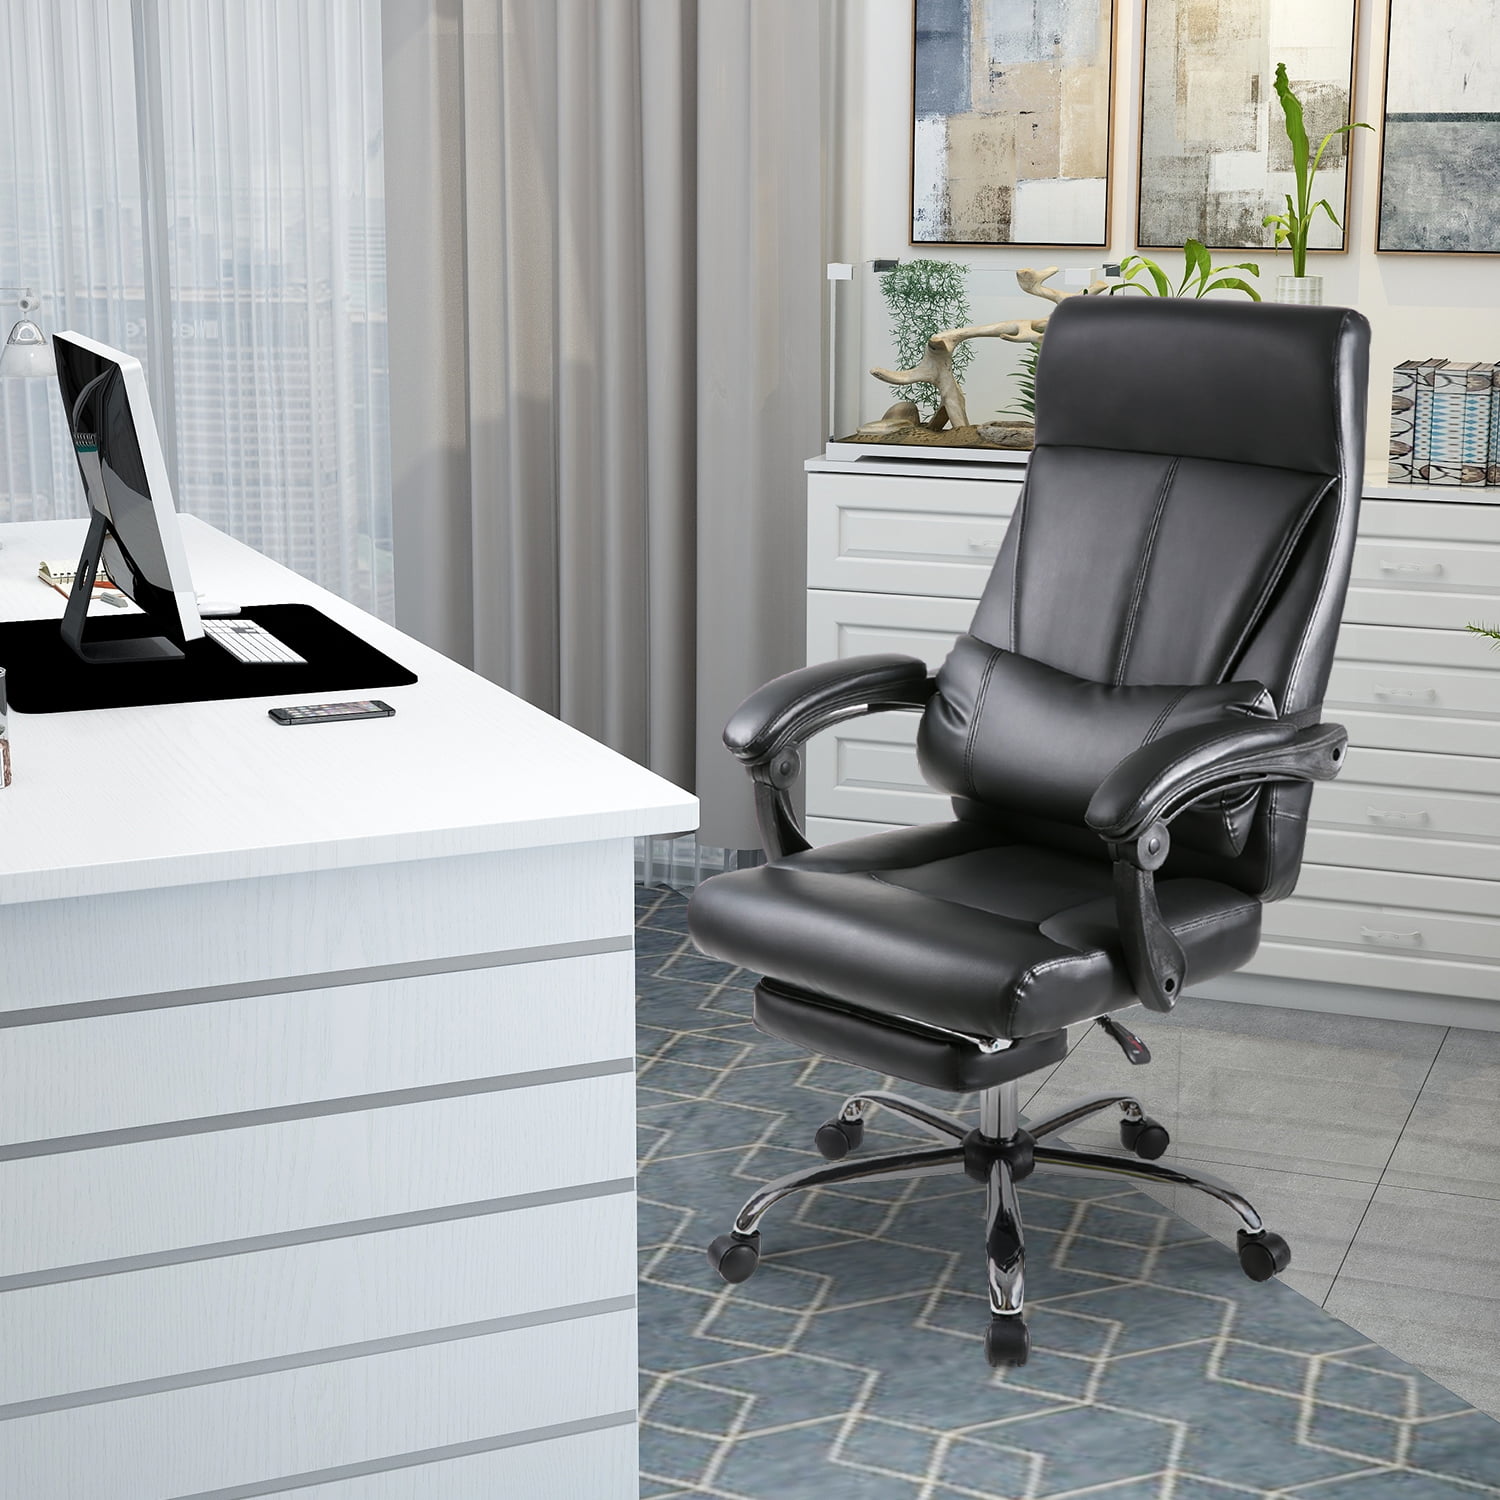 Ergonomic Executive Office Chair with Wheels, SEGMART 21.3 ...